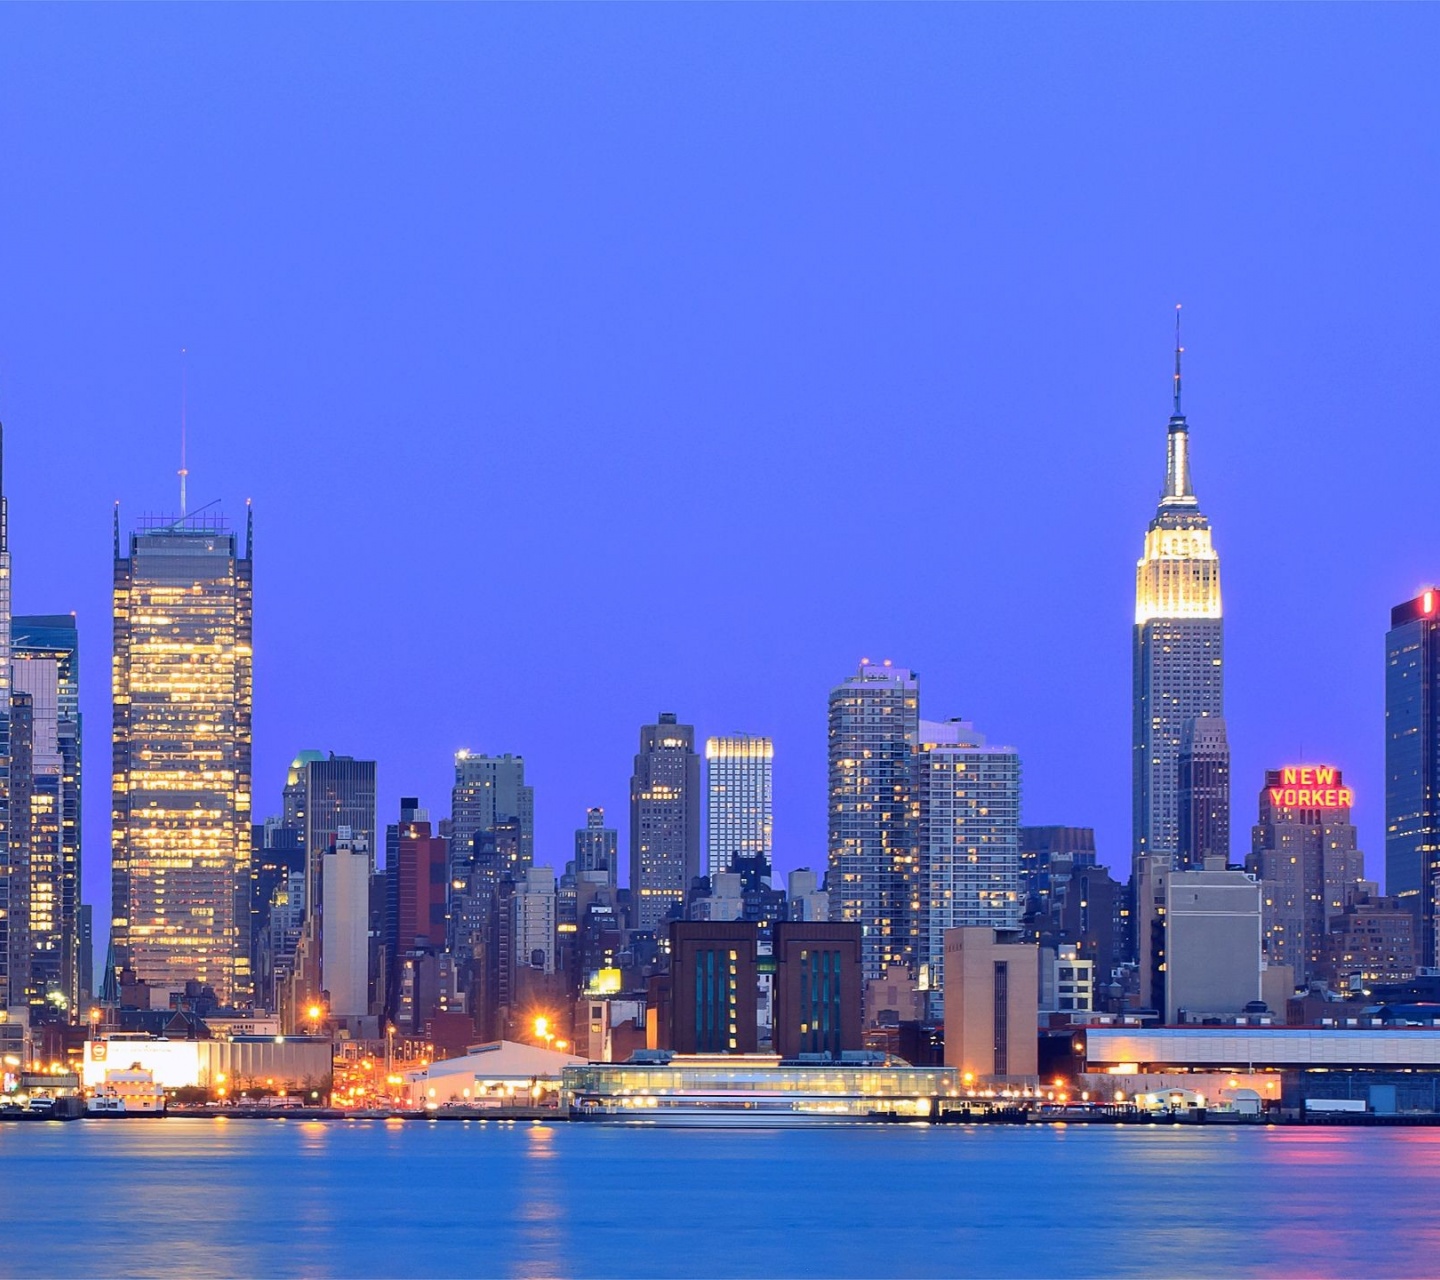 Usa New York Metropolis Buildings Skyscrapers Night Lights River